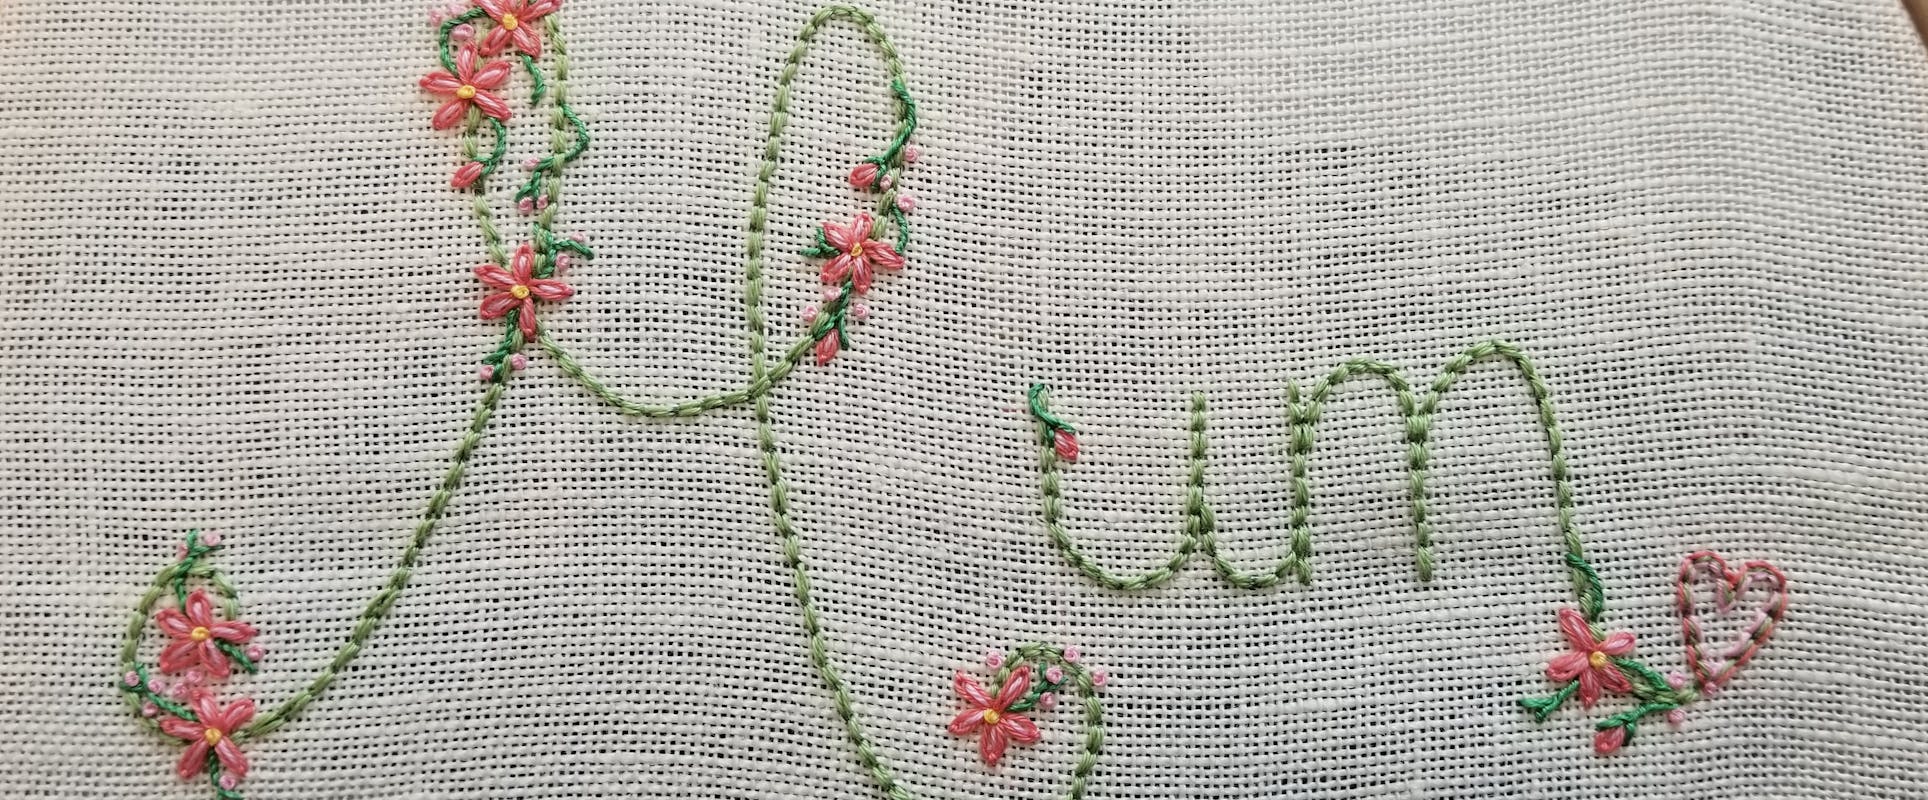 Mom Week: Make an Embroidered Journal for Mom - Design Improvised